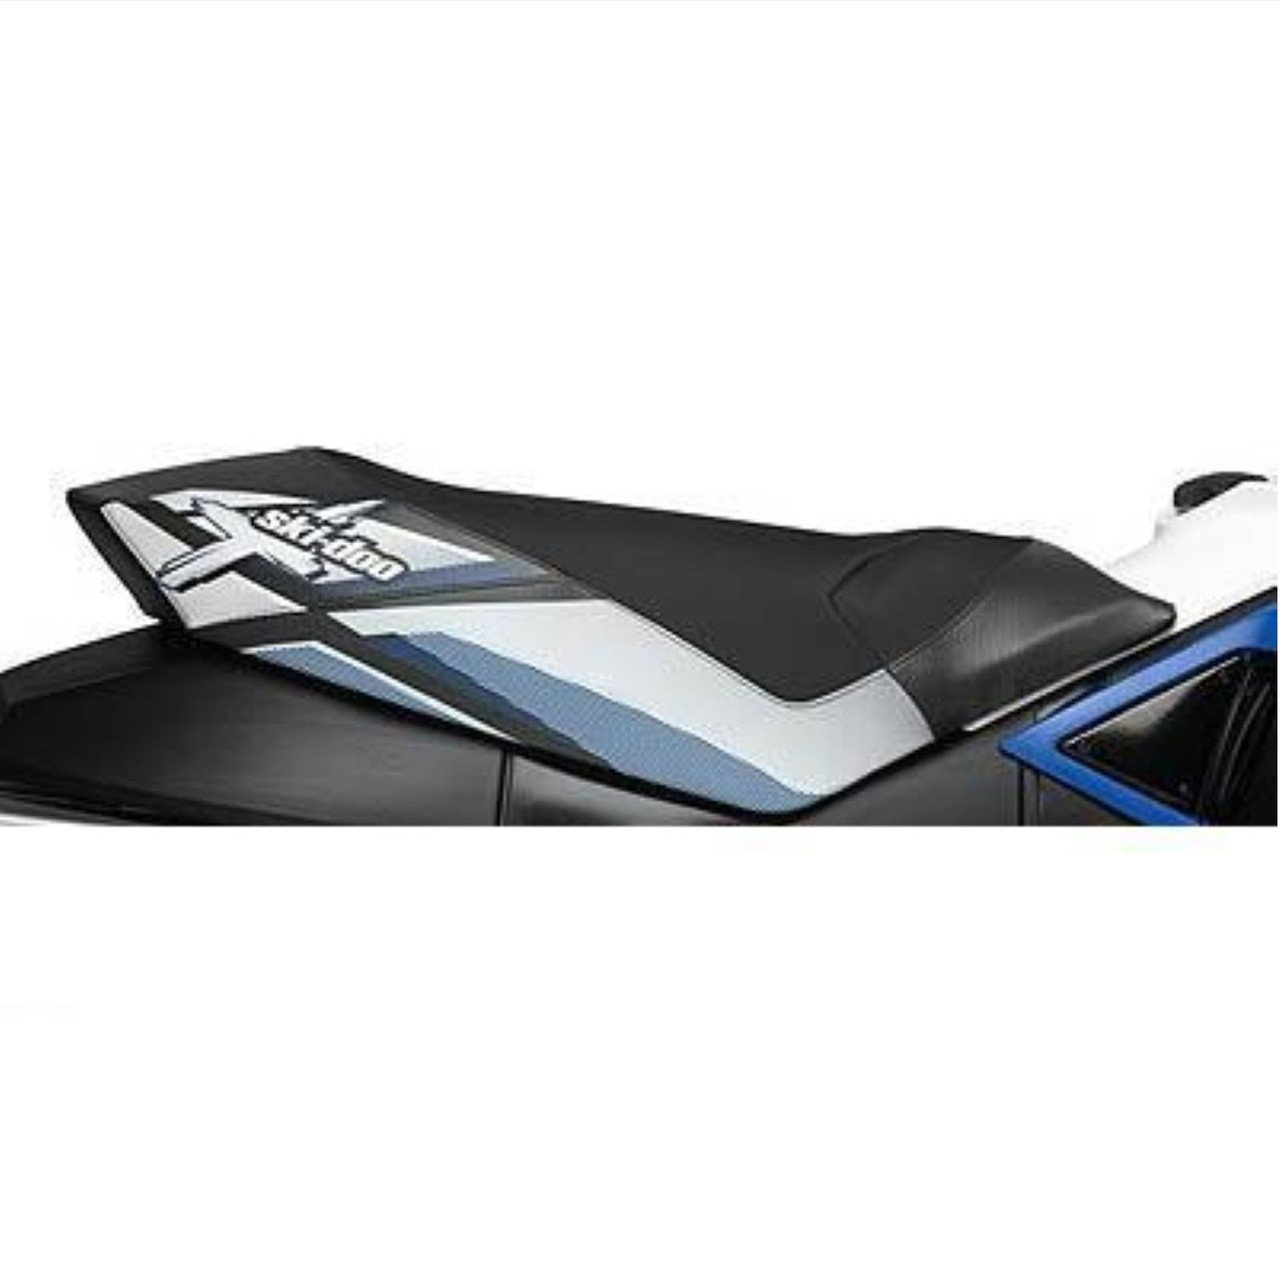 Ski-Doo REV-XP New OEM High Rise Seat Cover X-Team Black/Blue Raised Tall Taller